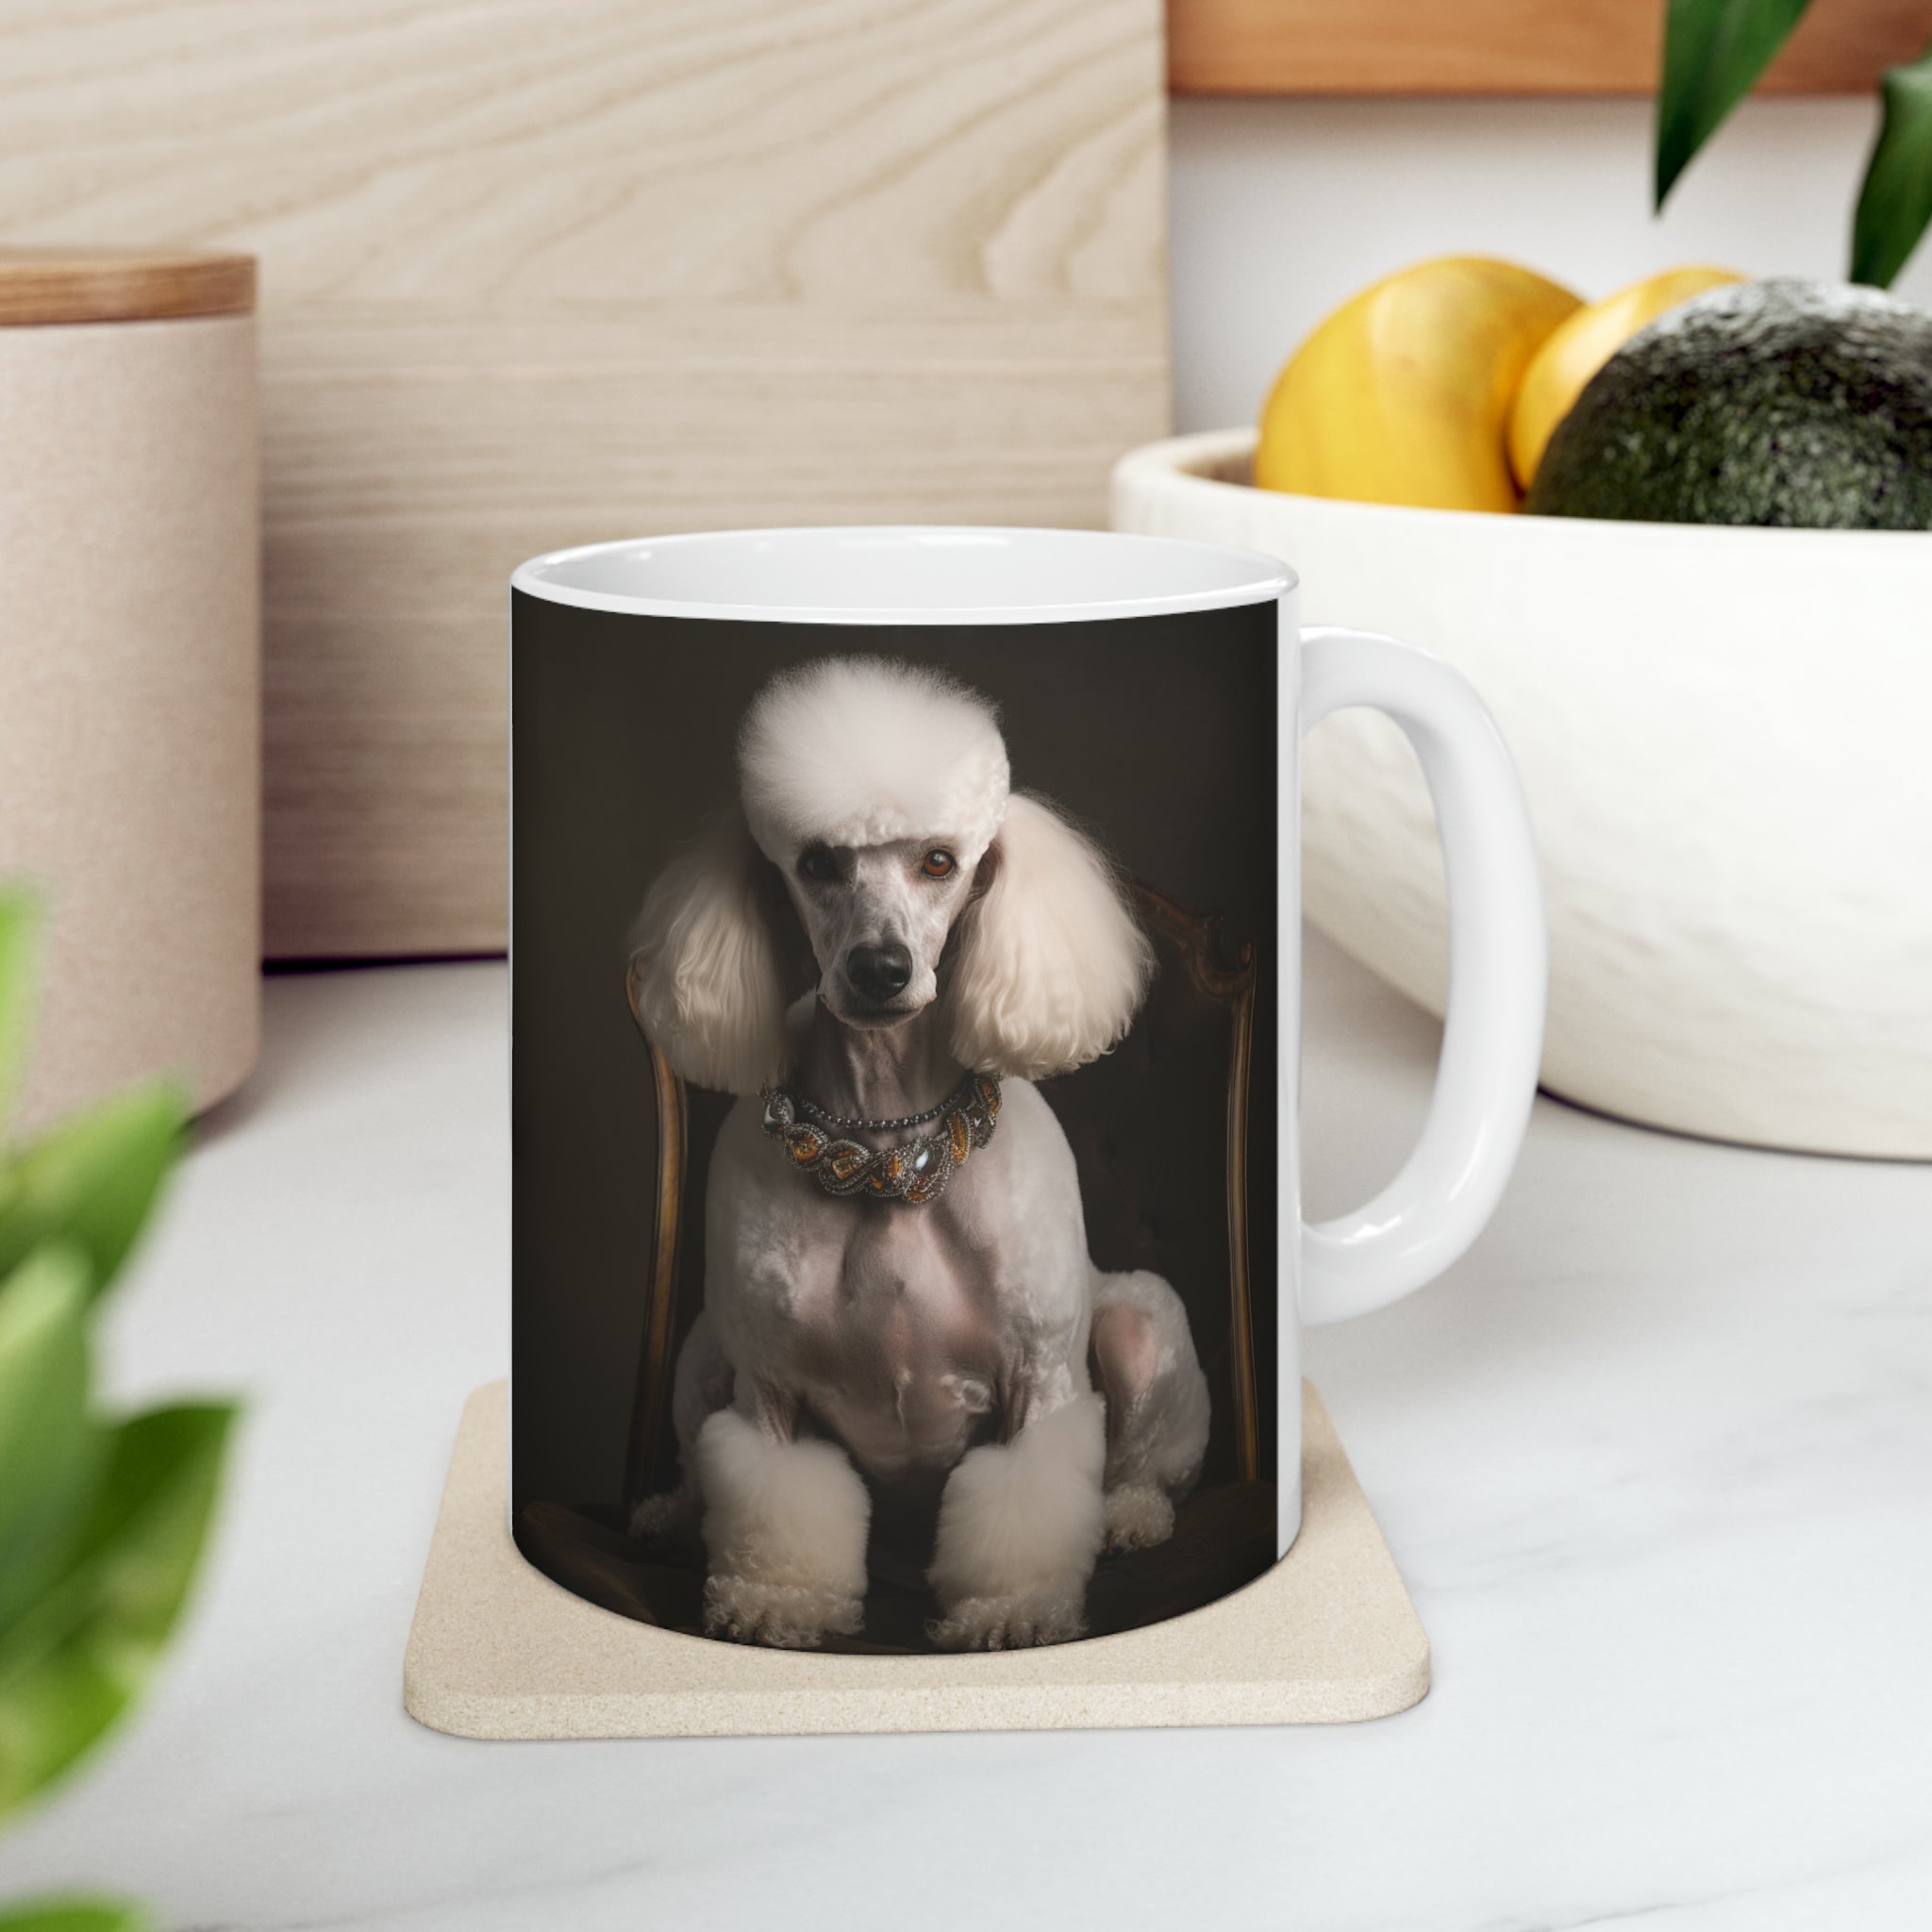 Poodle Princess Dog Lover Photo Ceramic Mug 11oz - Personalized Pet Mug for Dog Lovers | Cherish Your Canine Companion with Every Sip